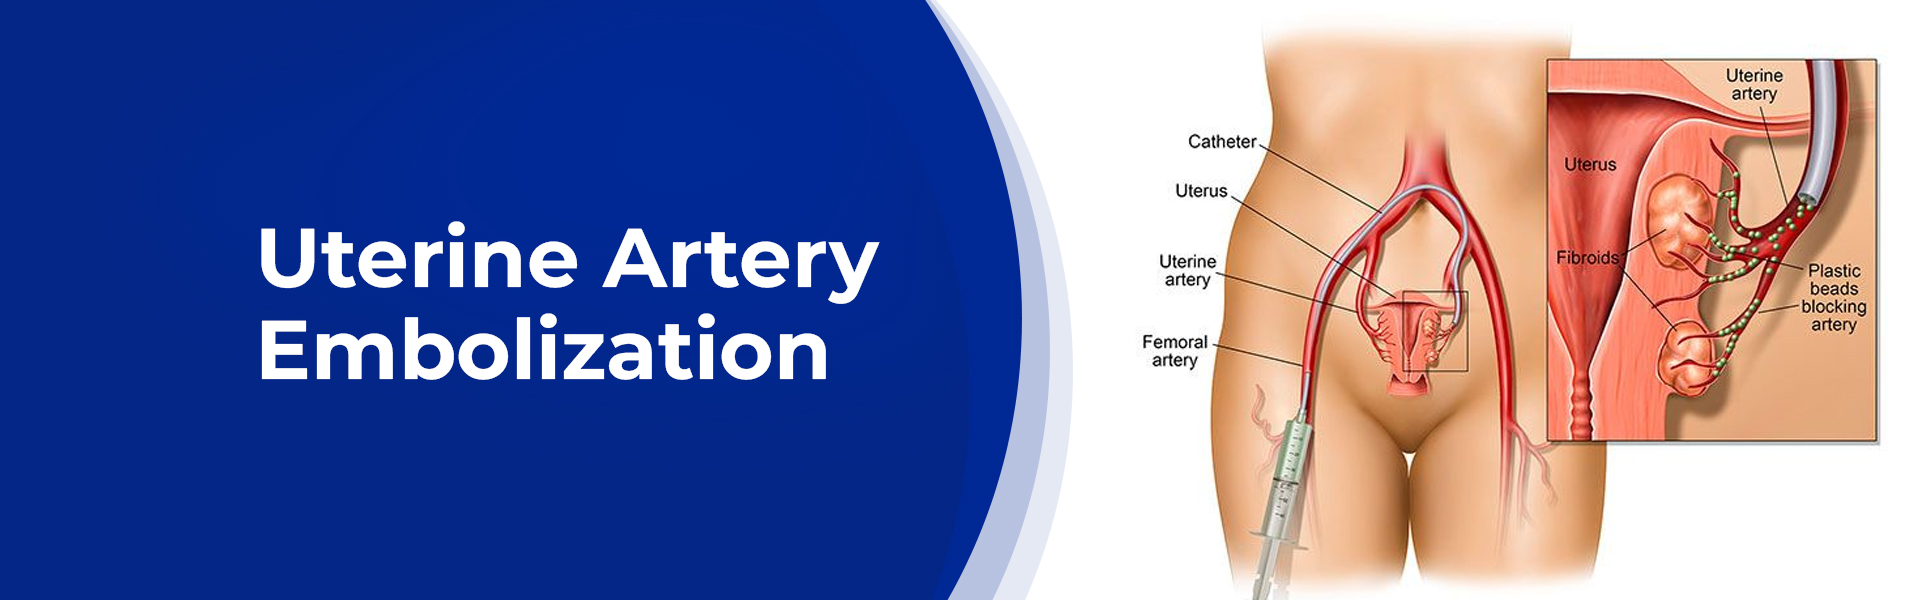 Urinary Artery Embolization – A Quick Guide